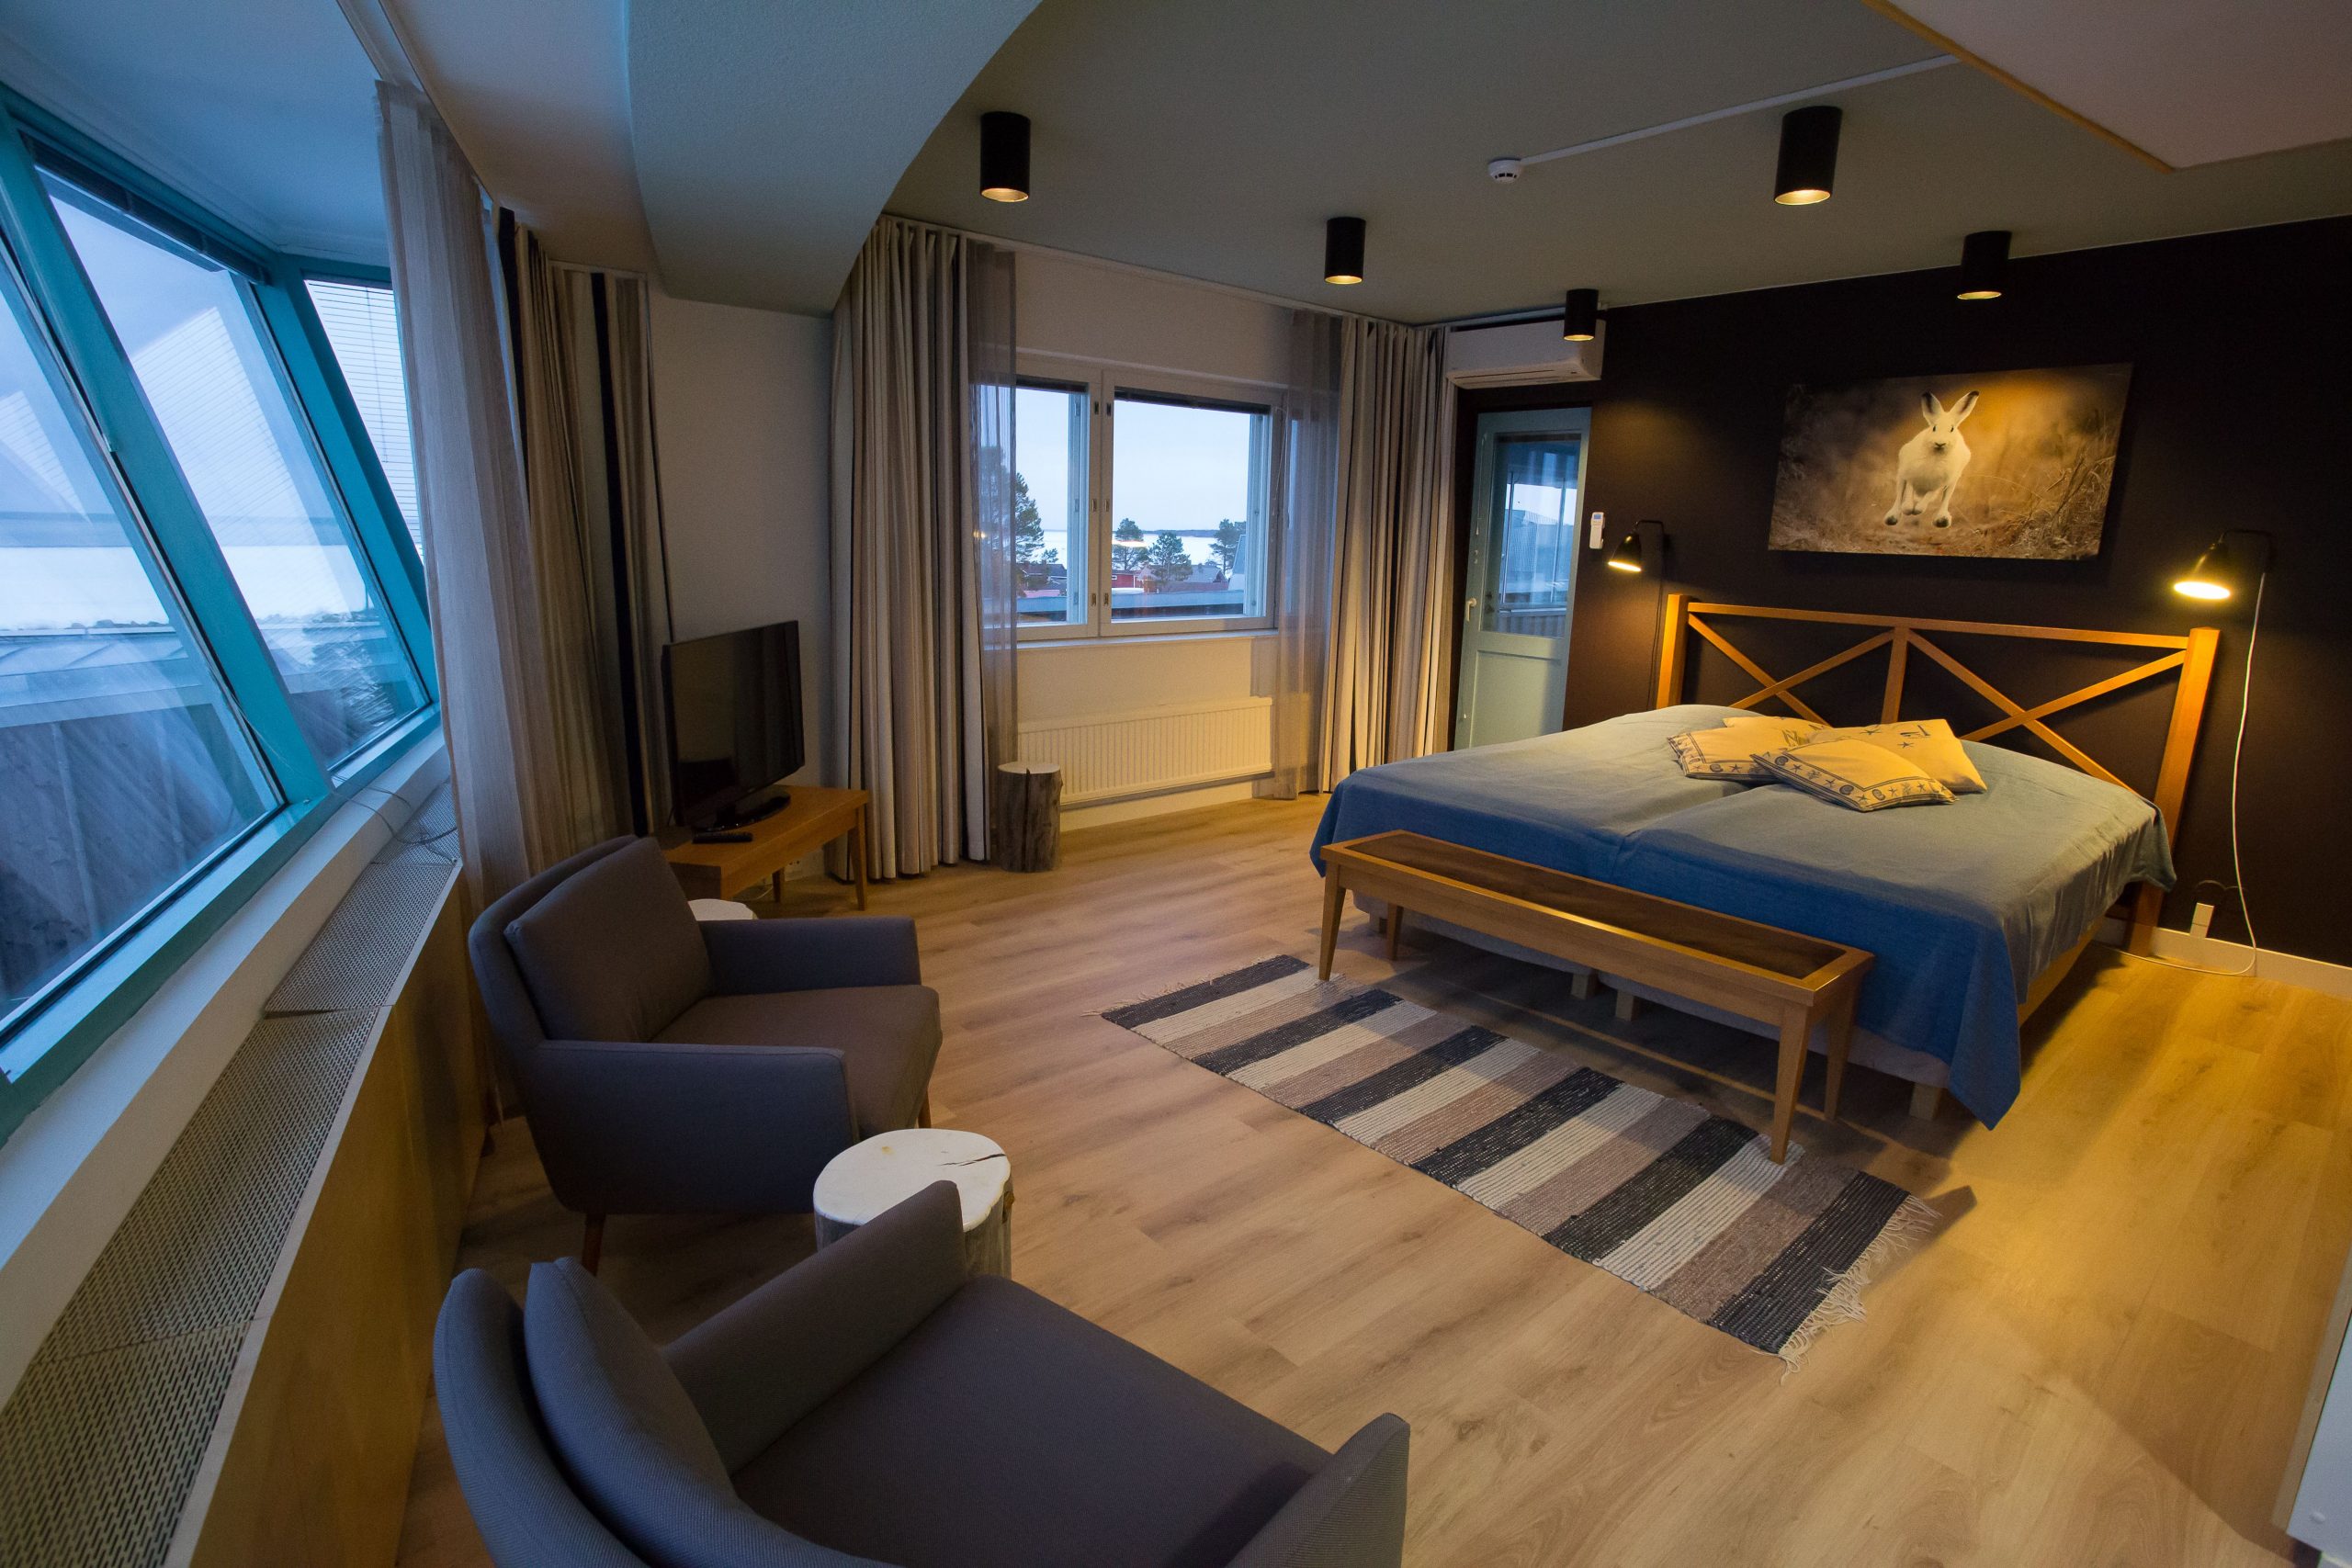 Accommodation / Superior room - Arctic Lighthouse Hotel, Wild Nordic Finland @wildnordicfinland